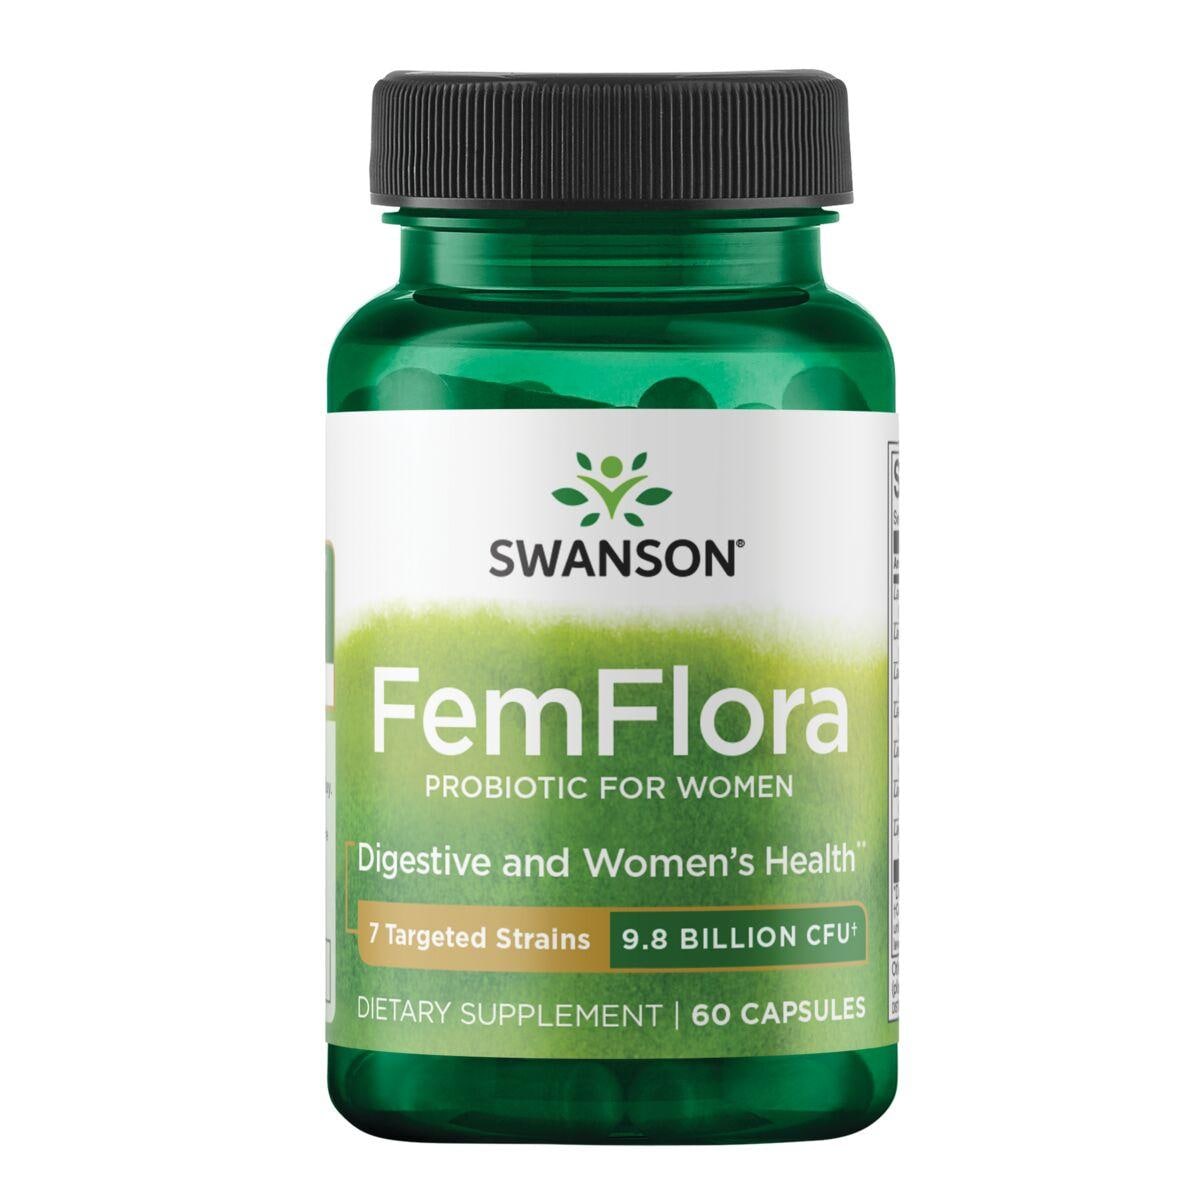 Swanson Ultra Femflora Probiotic for Women Supplement Vitamin | 9.8 Billion CFU | 60 Caps